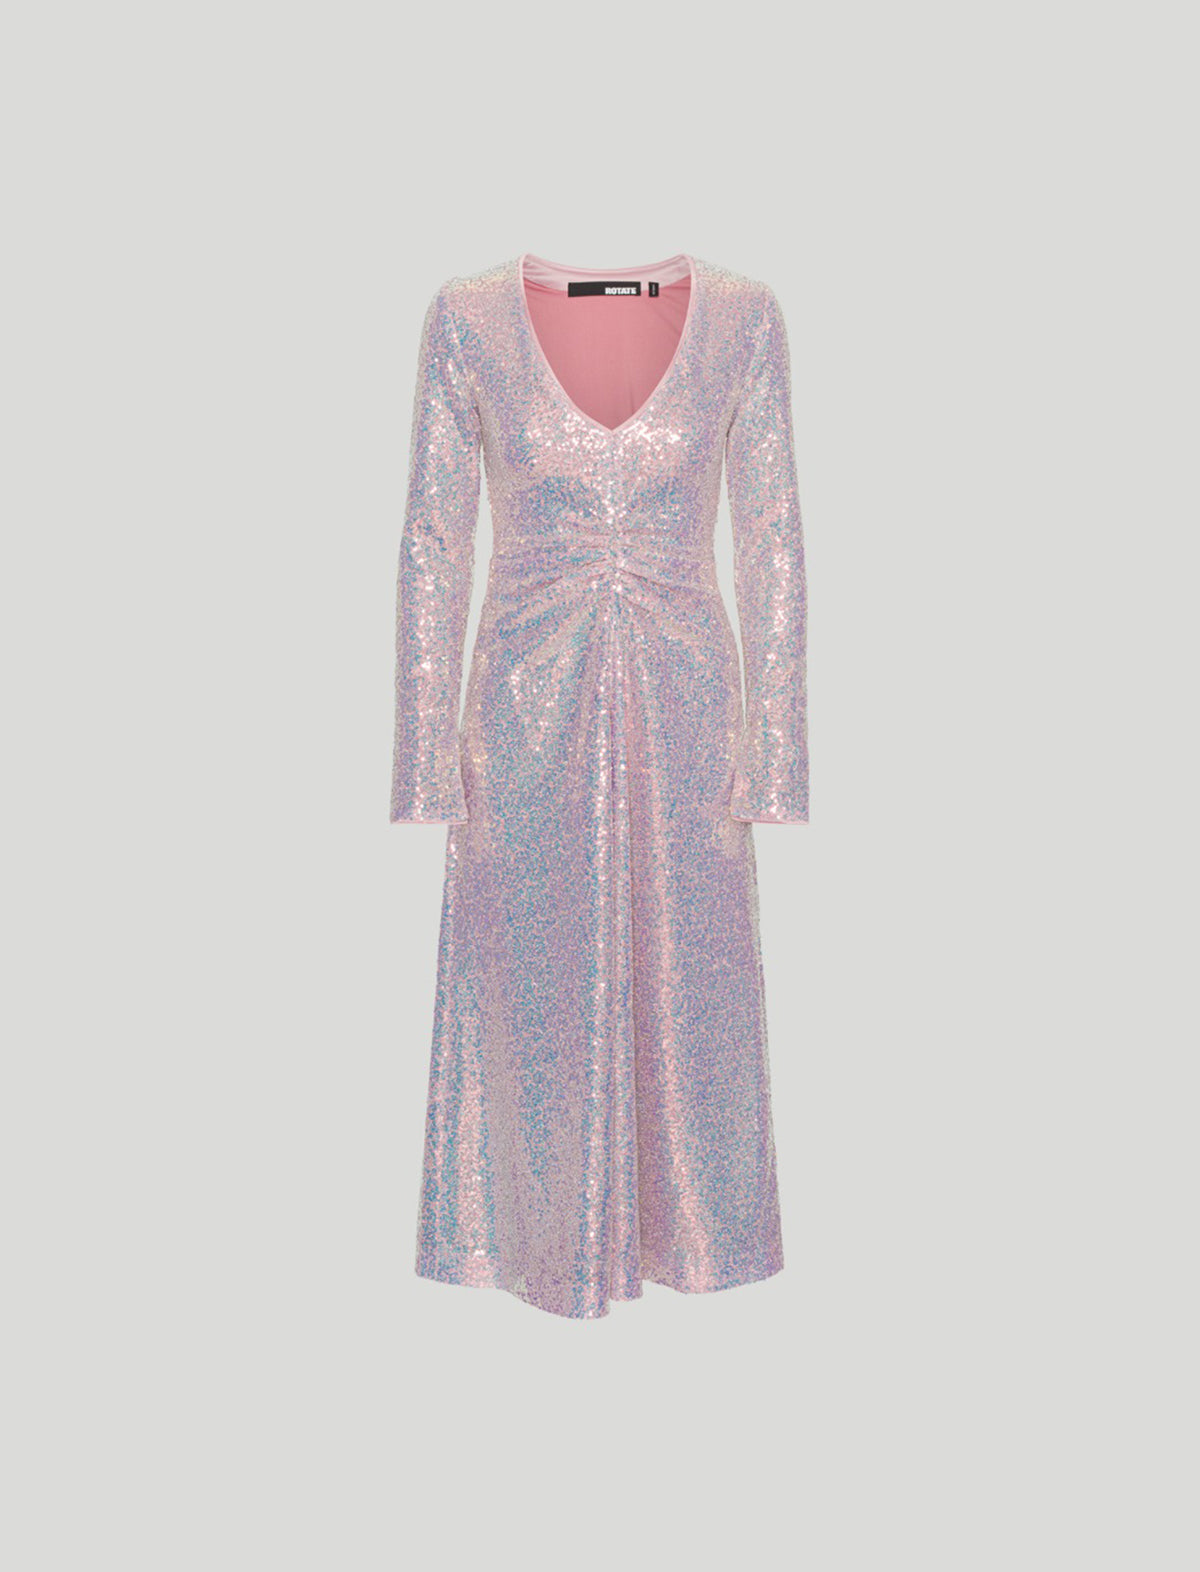 ROTATE Sierra Sequin Midi Dress in Sachet Pink